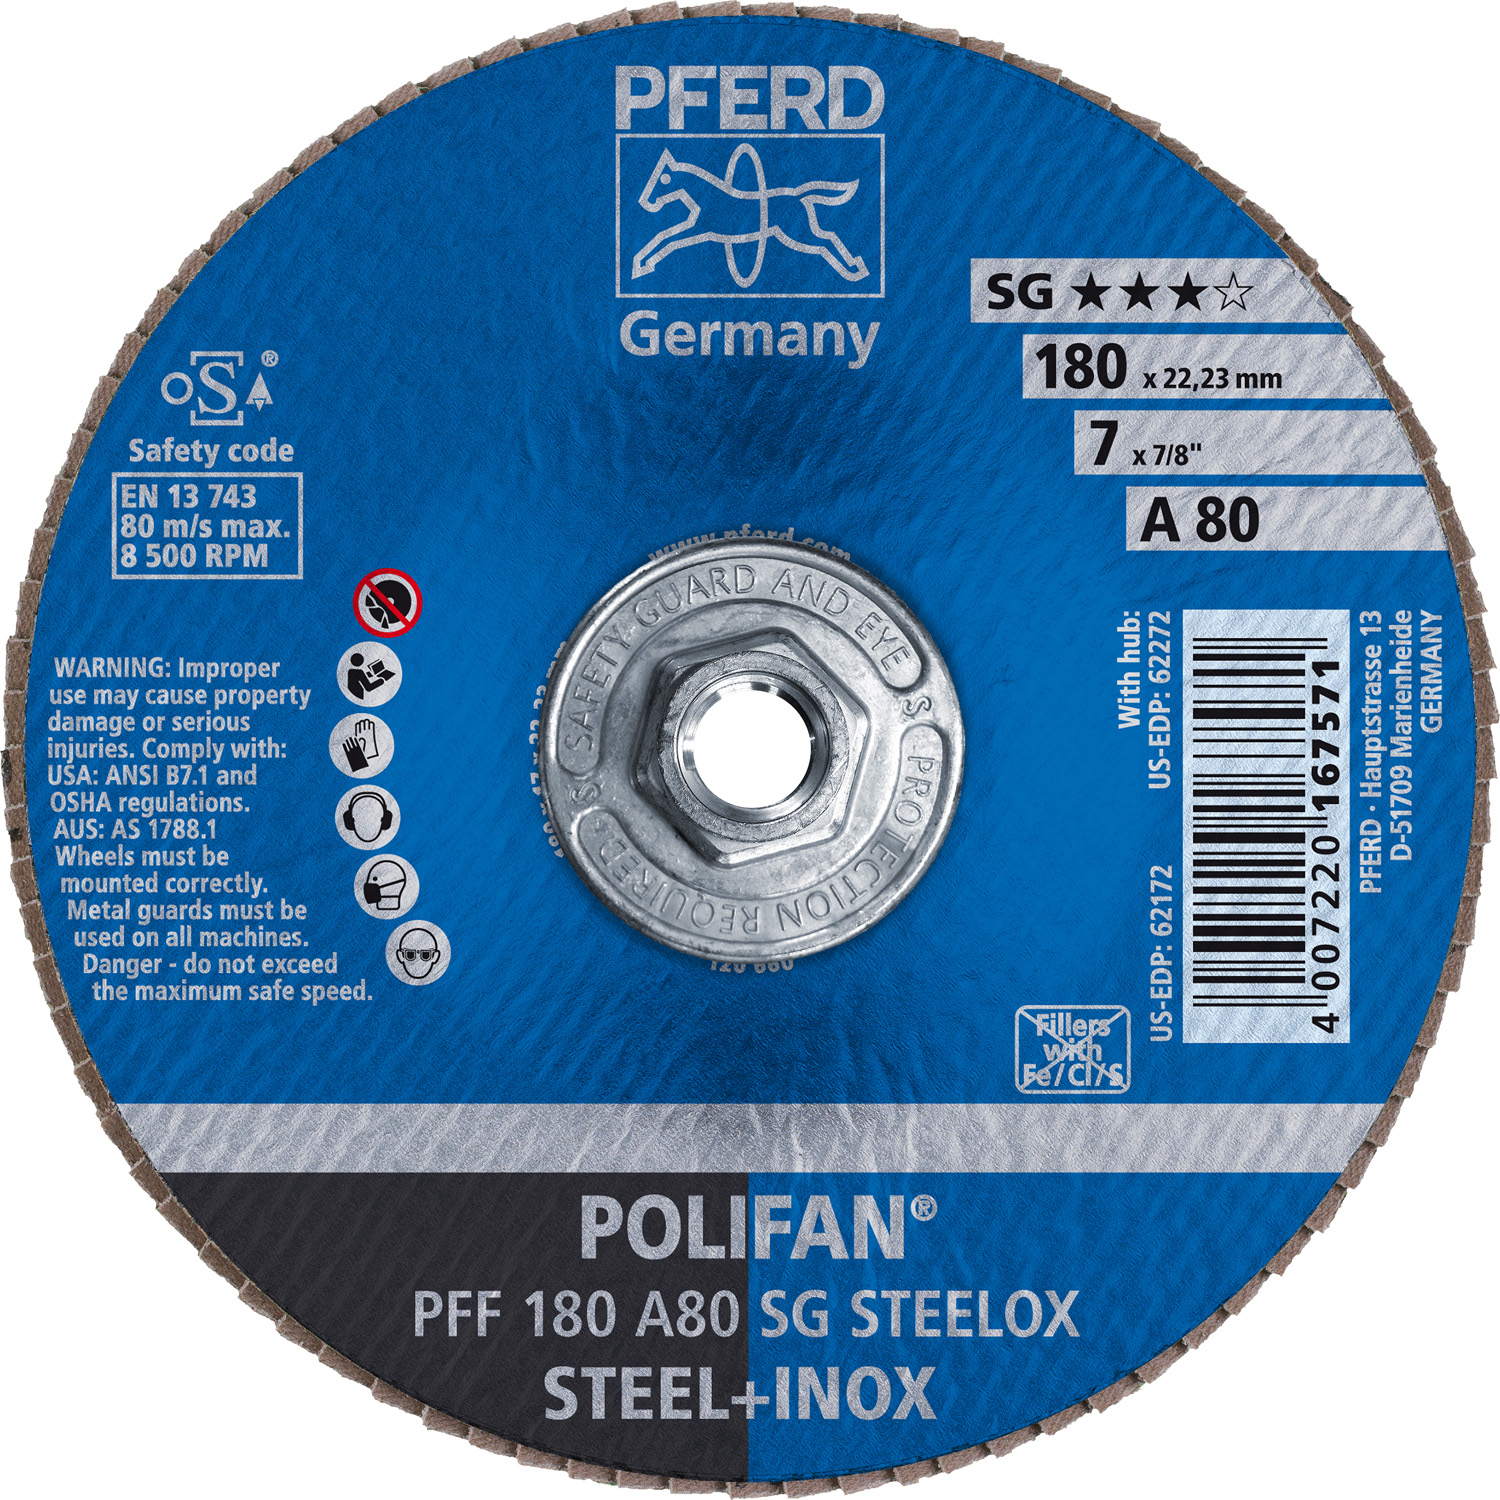 7" x 5/8-11 Thd. POLIFAN® Flap Disc, A SG STEELOX, Aluminum Oxide, 80 Grit, Conical